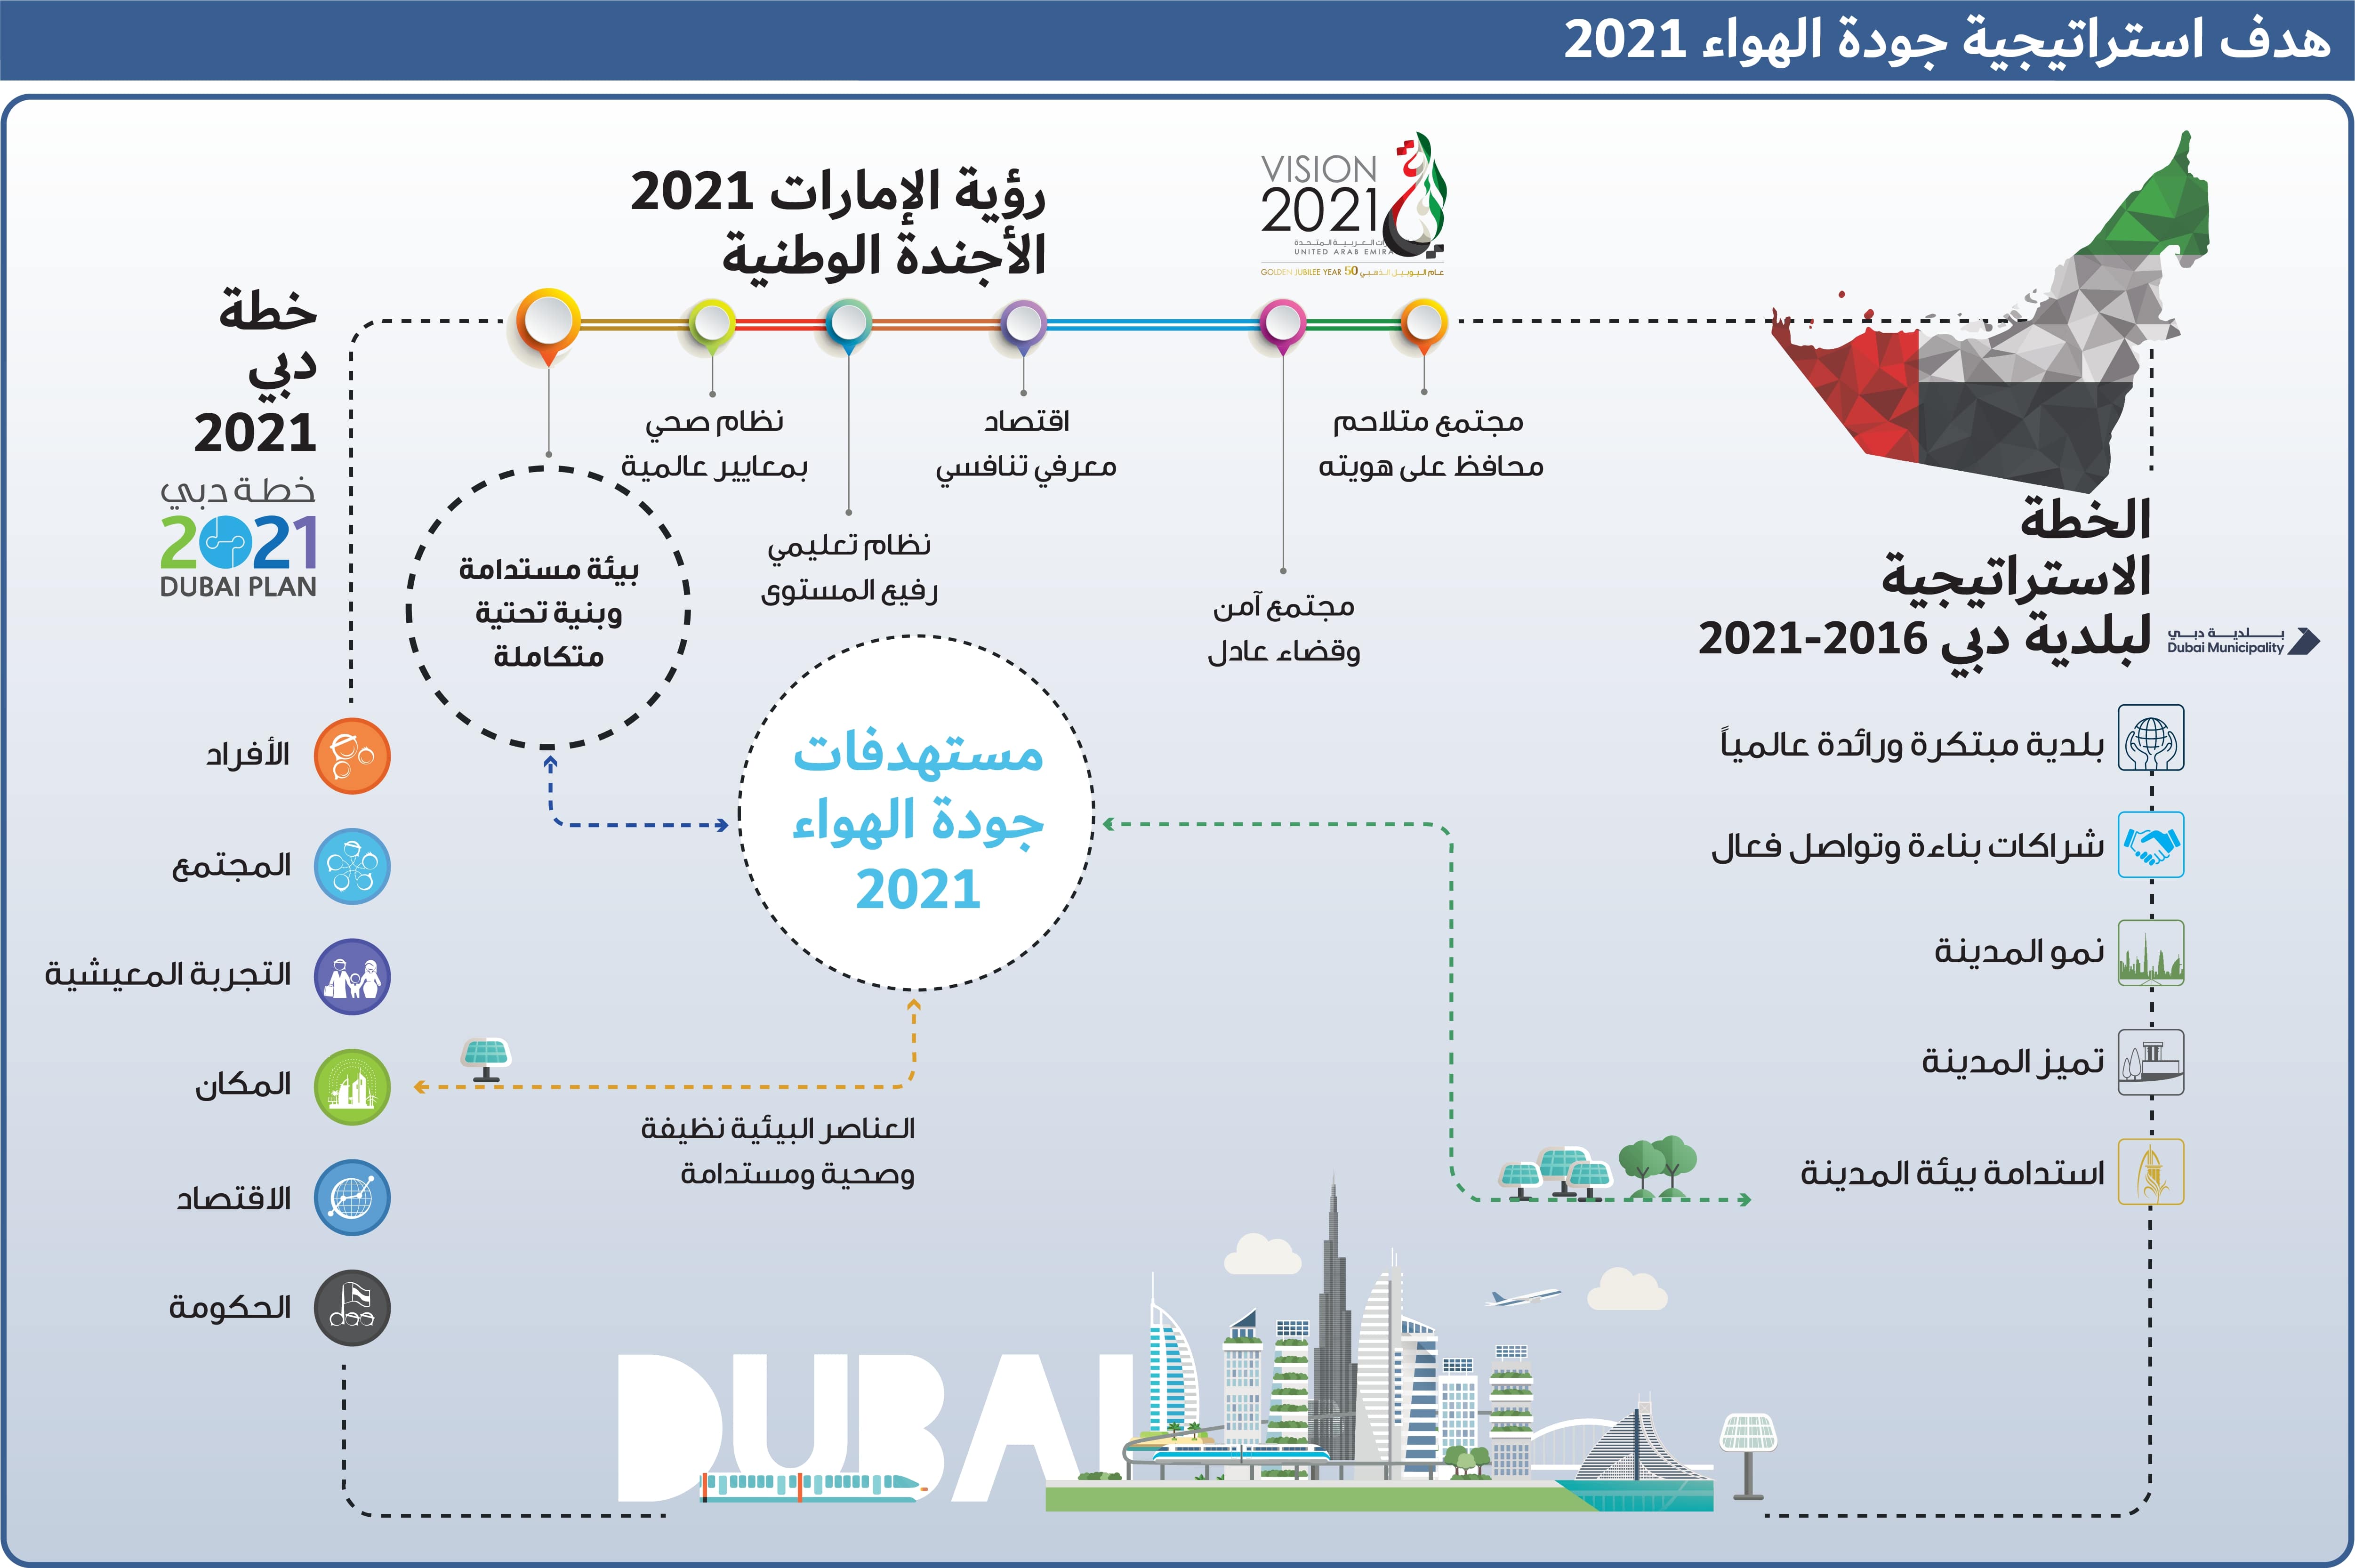 Dubai Air Quality Strategy Plan And Agenda